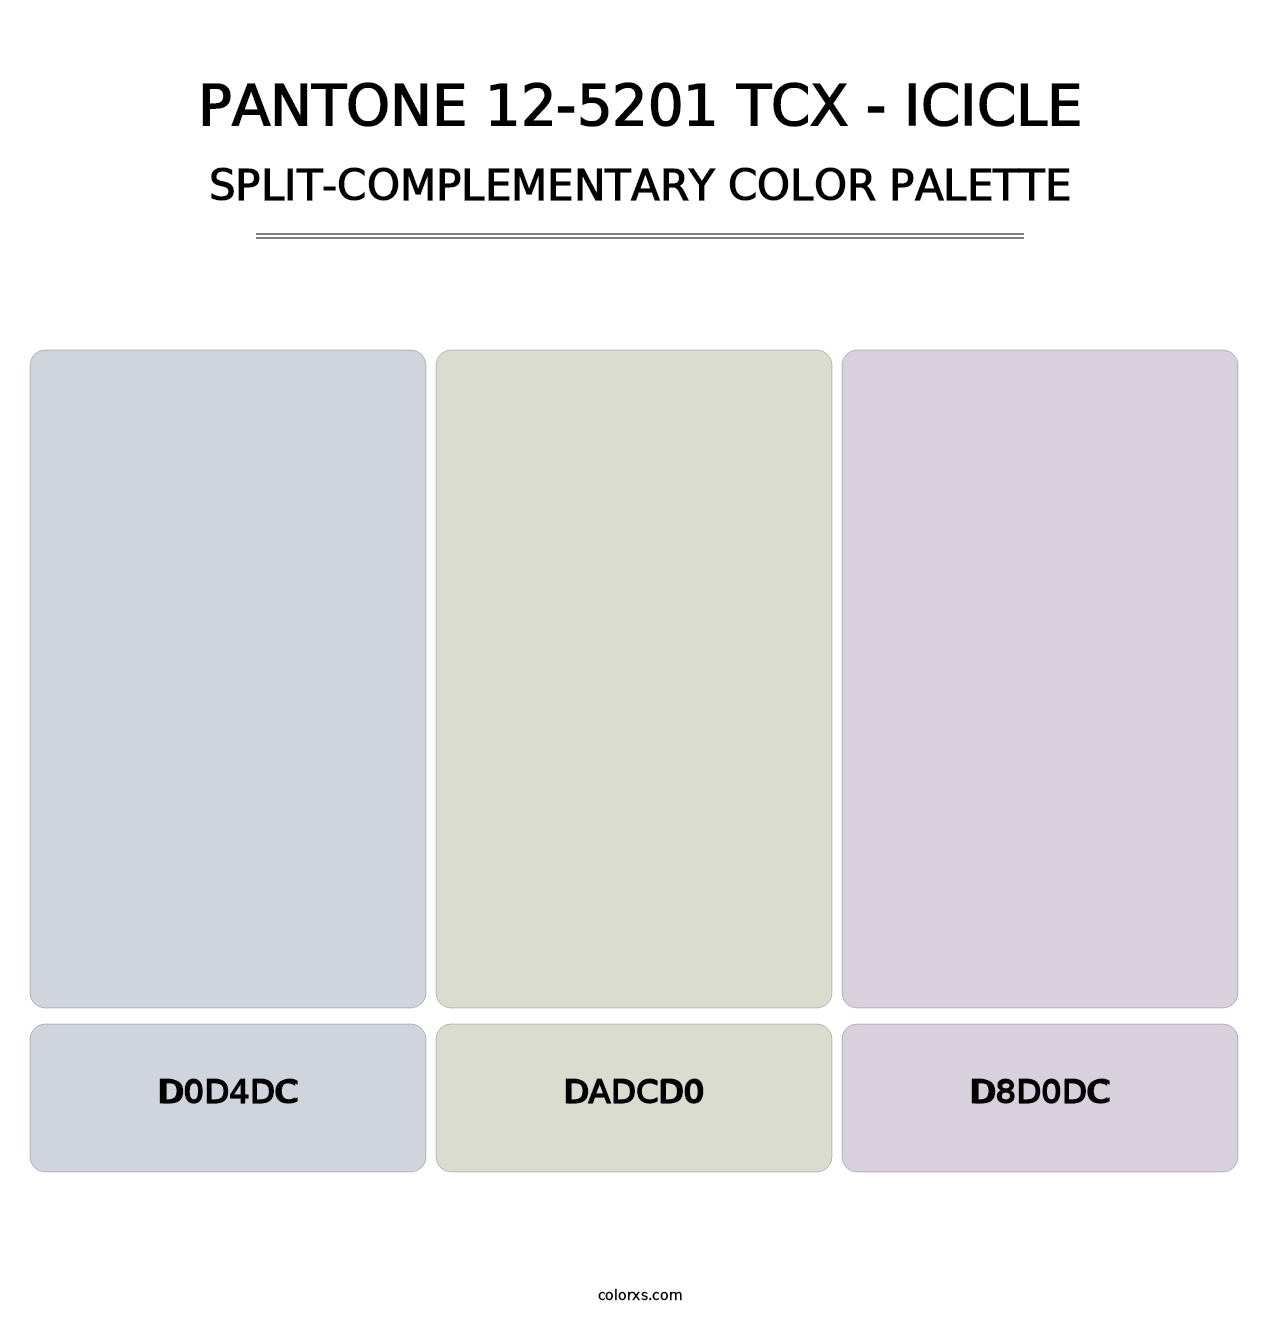 PANTONE 12-5201 TCX - Icicle - Split-Complementary Color Palette